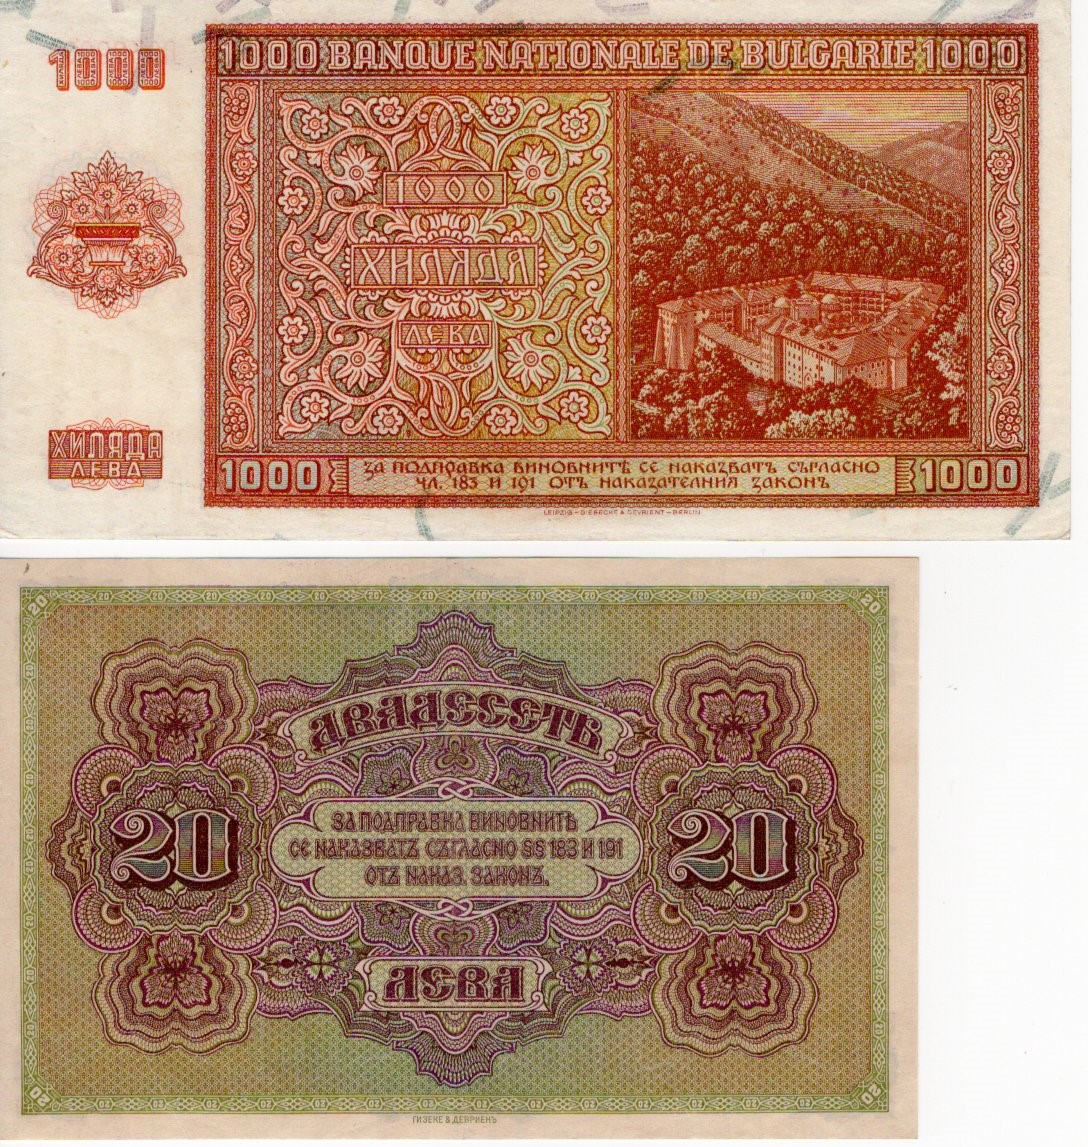 Bulgaria (2), 20 Leva Zlatni (Gold Leva) ND issued 1917, serial H 028540 (TBB B130a, Pick23a) EF, - Image 2 of 2